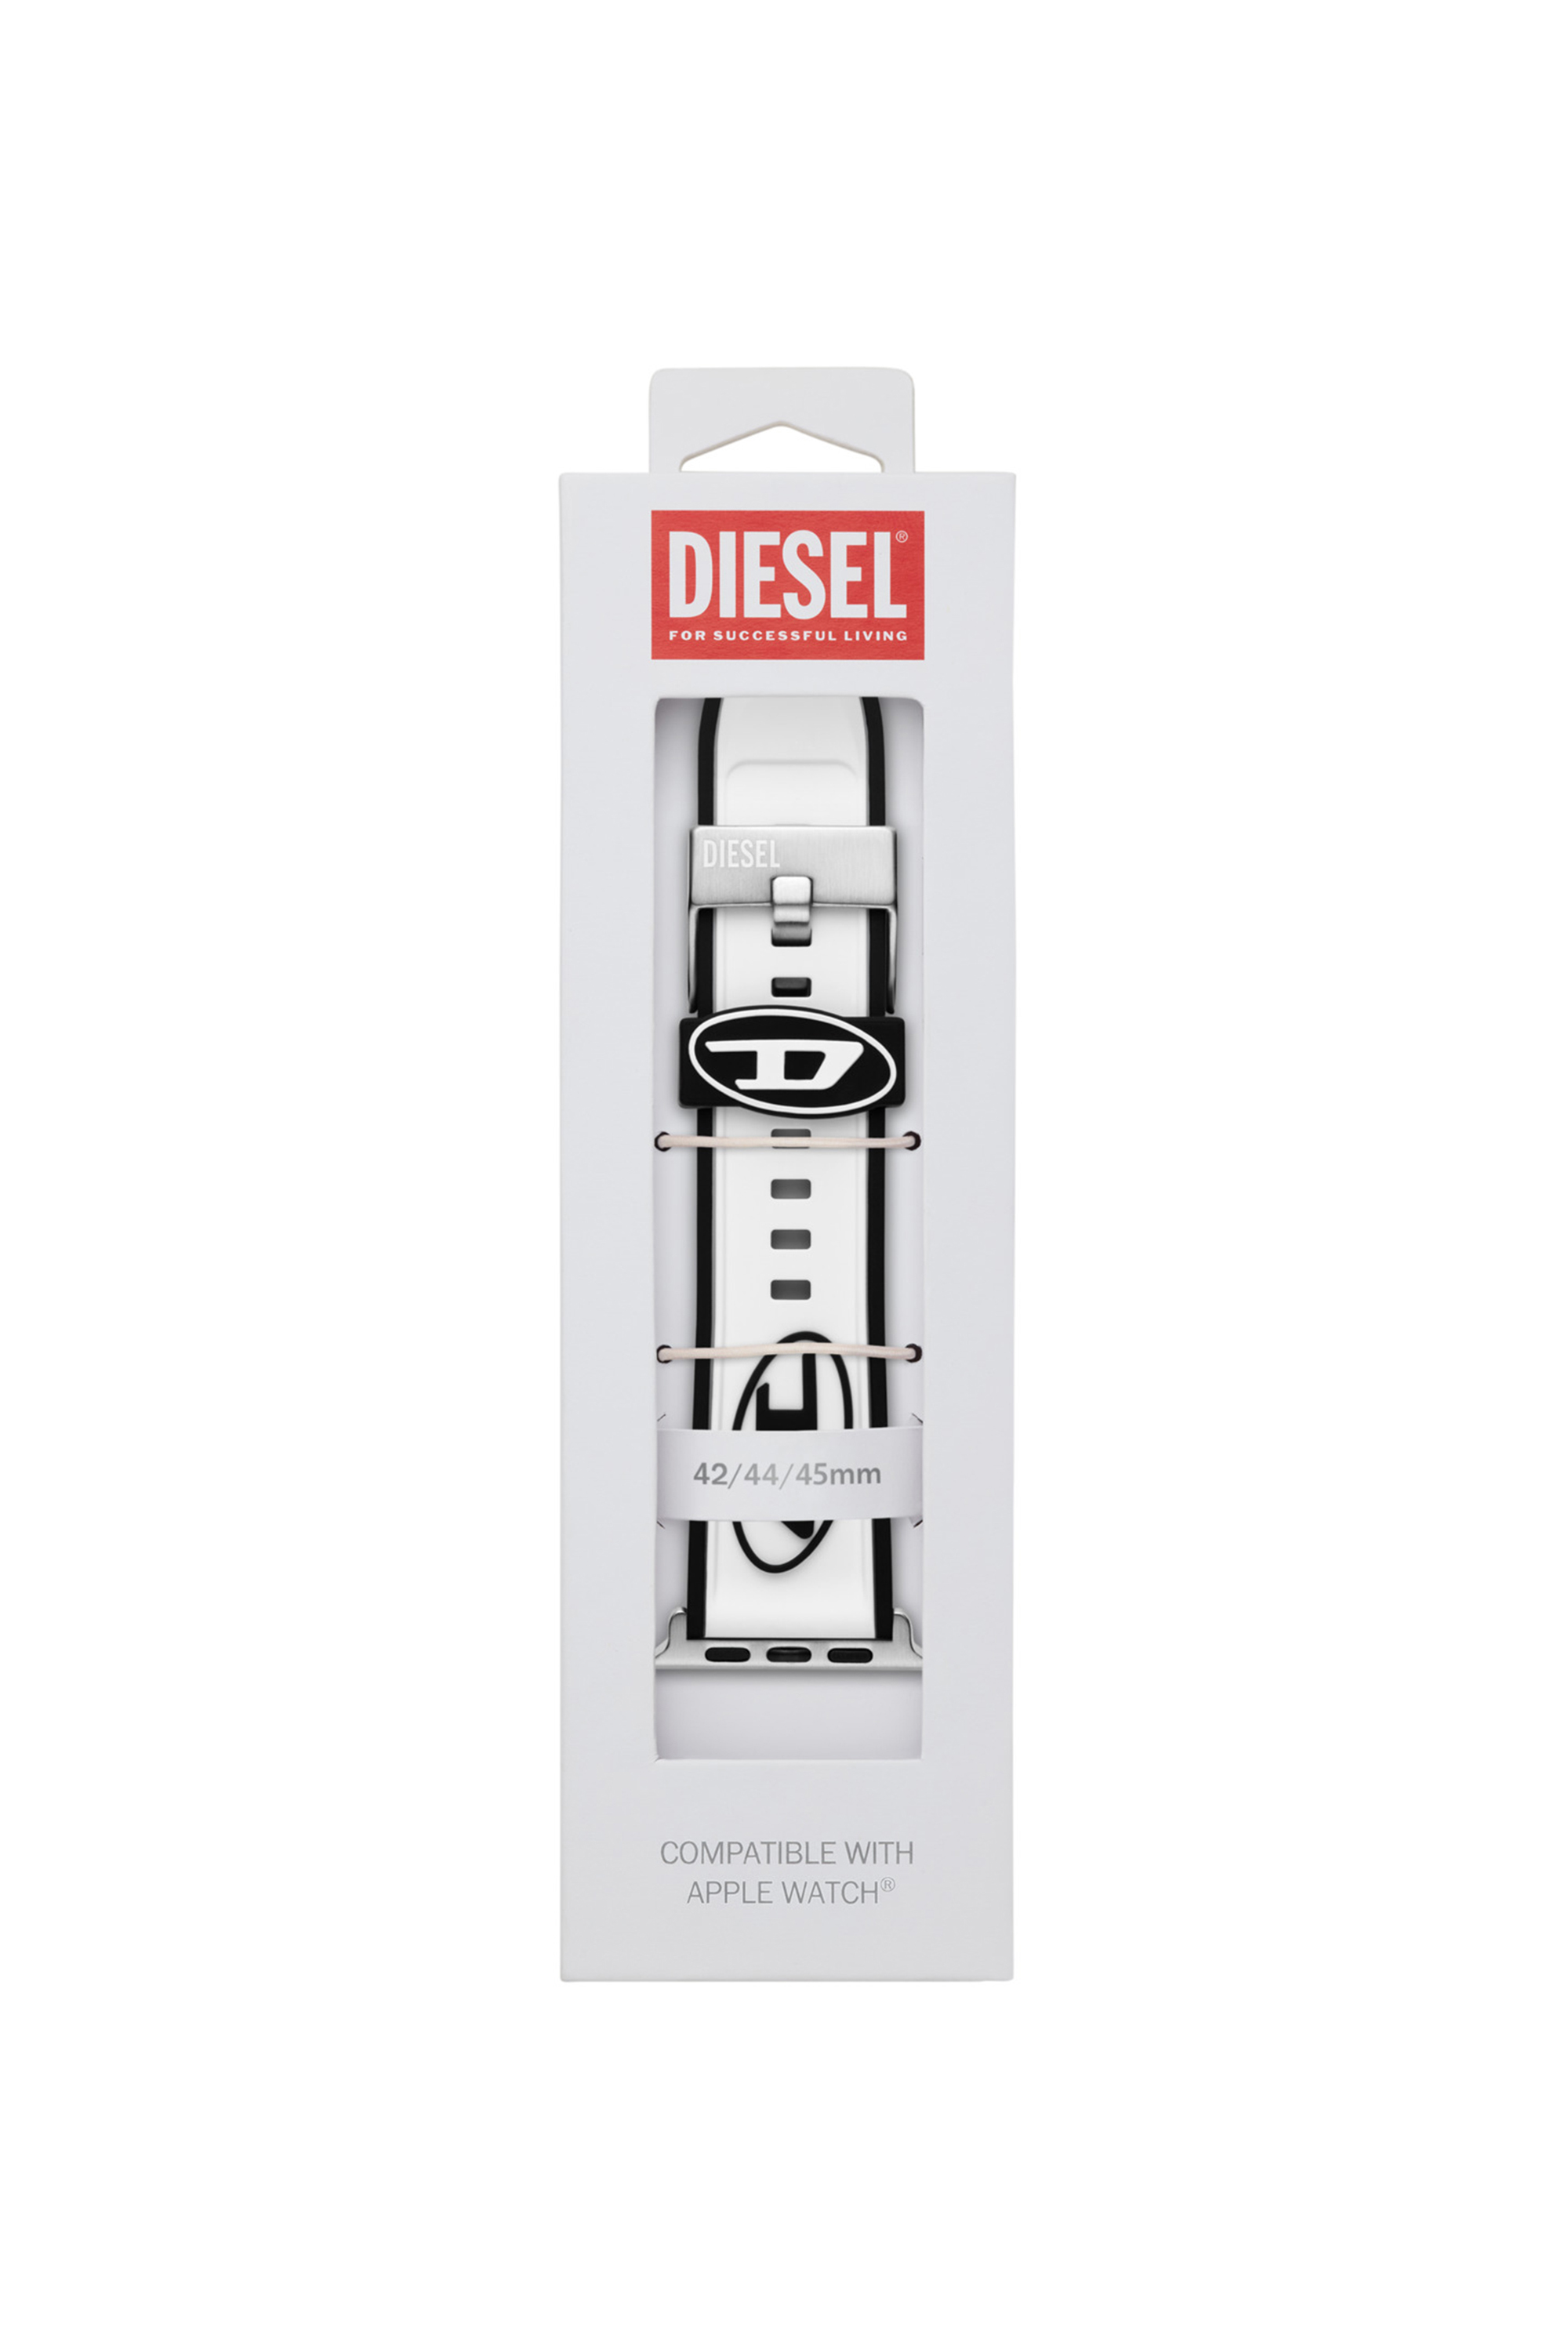 Diesel - DSS009, White - Image 2